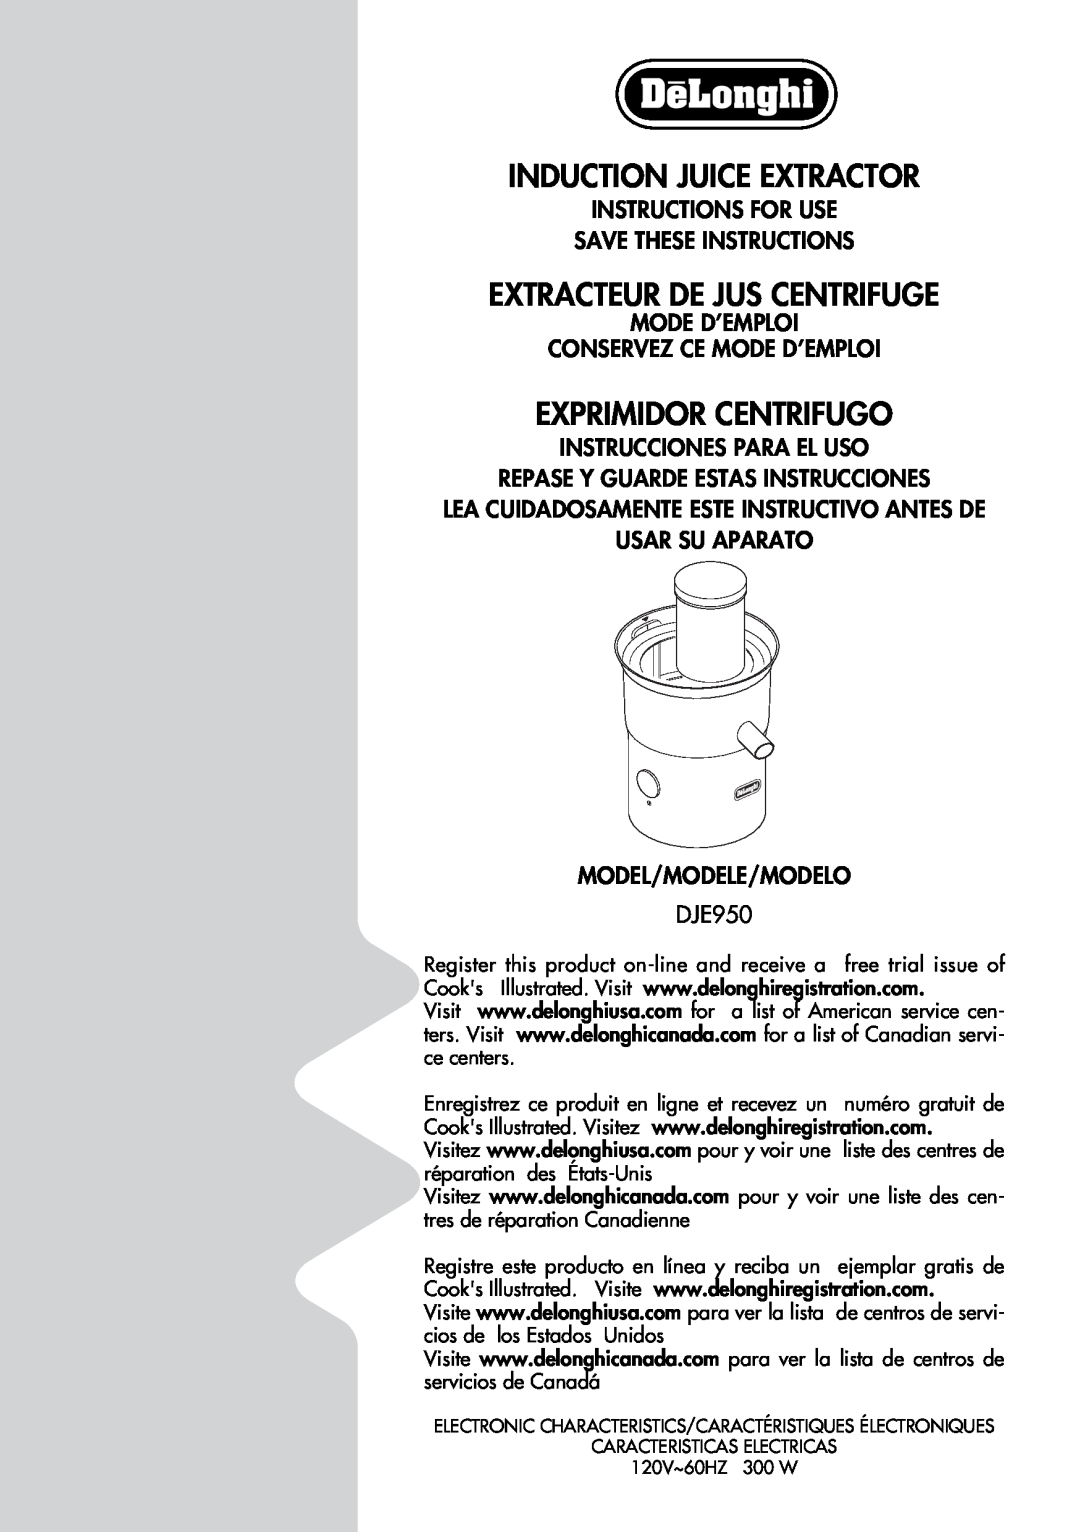 DeLonghi DJE950 manual Induction Juice Extractor, Extracteur De Jus Centrifuge, Exprimidor Centrifugo 